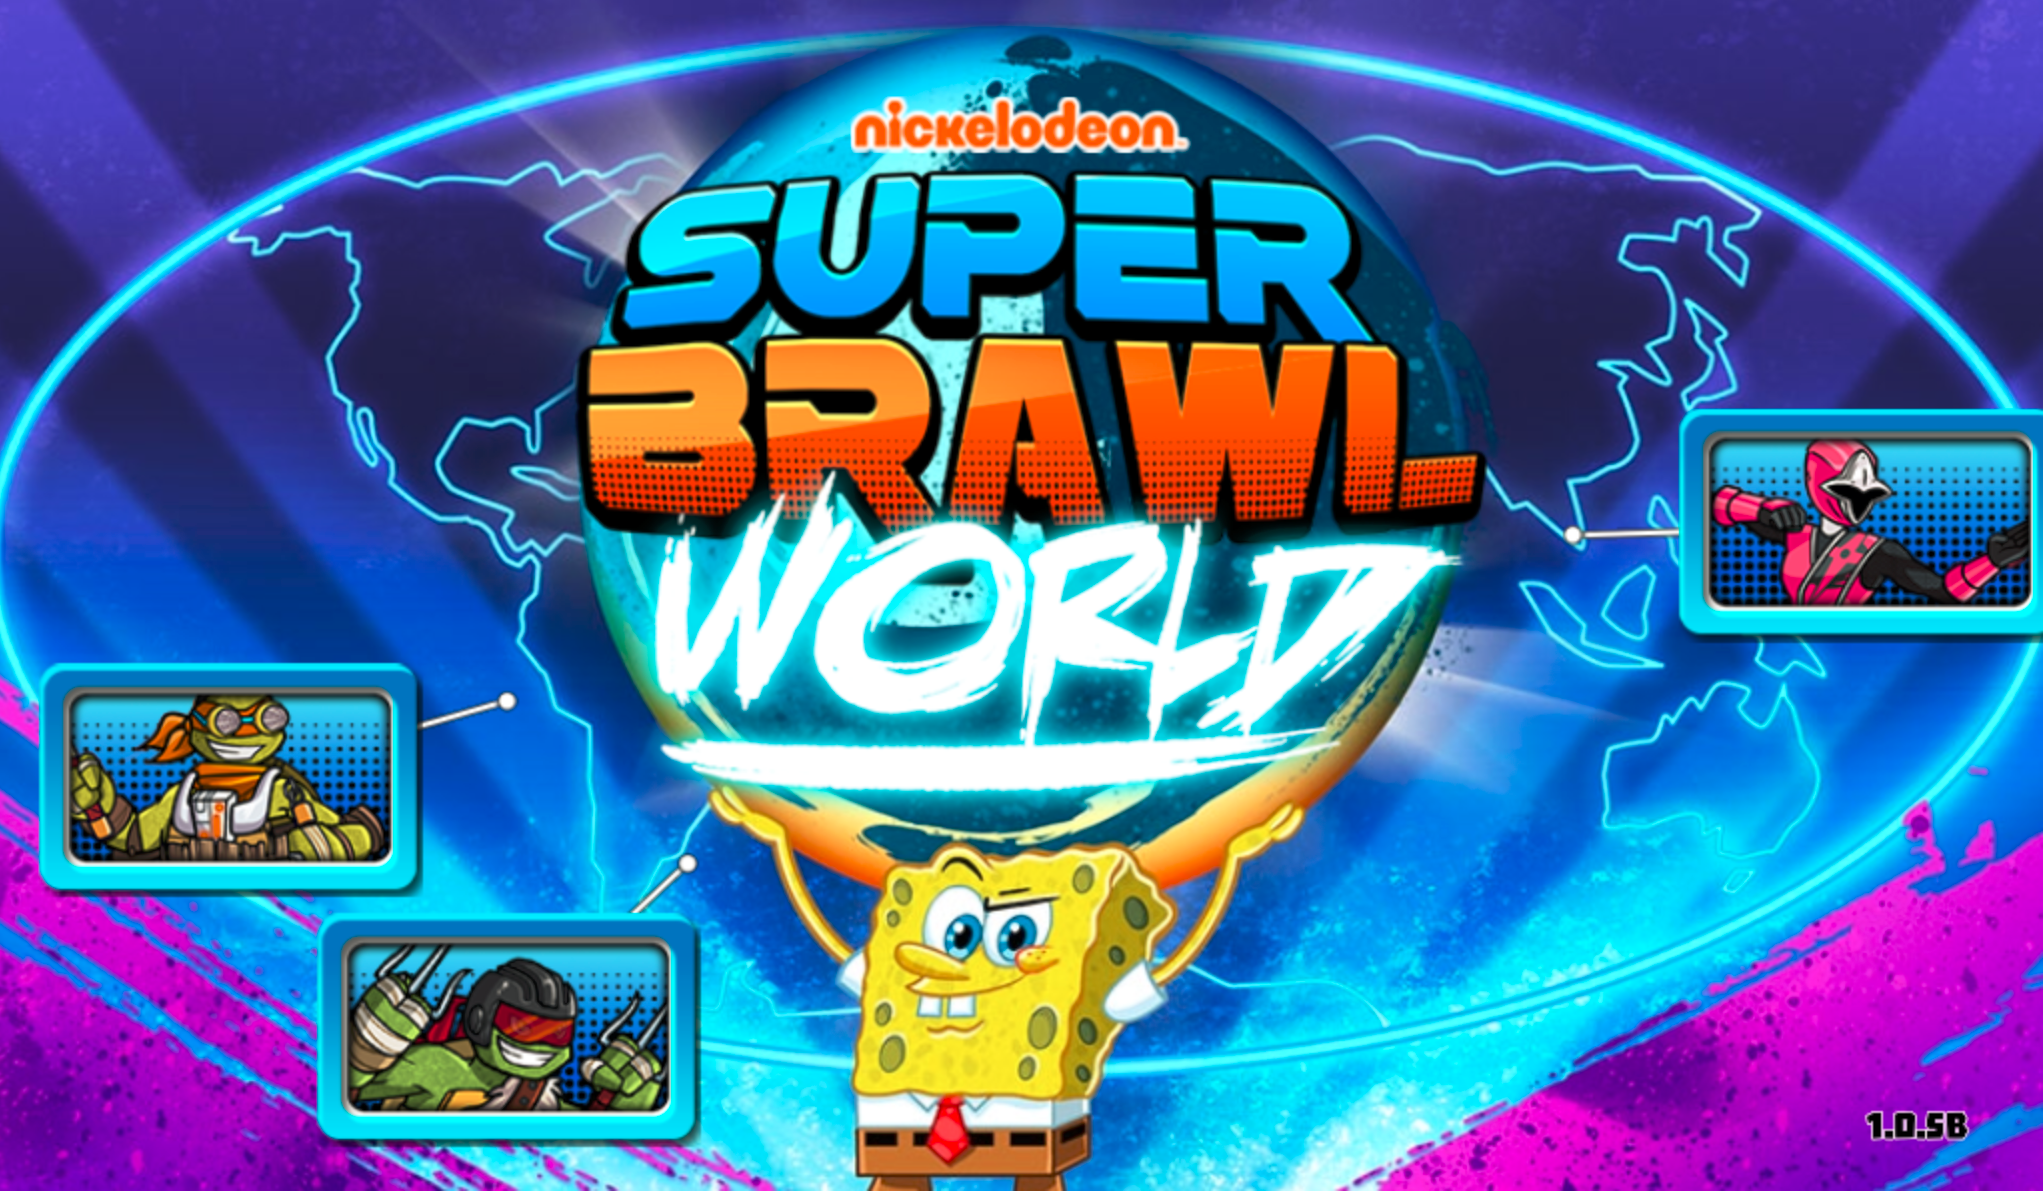 Nickelodeon games super brawl 2